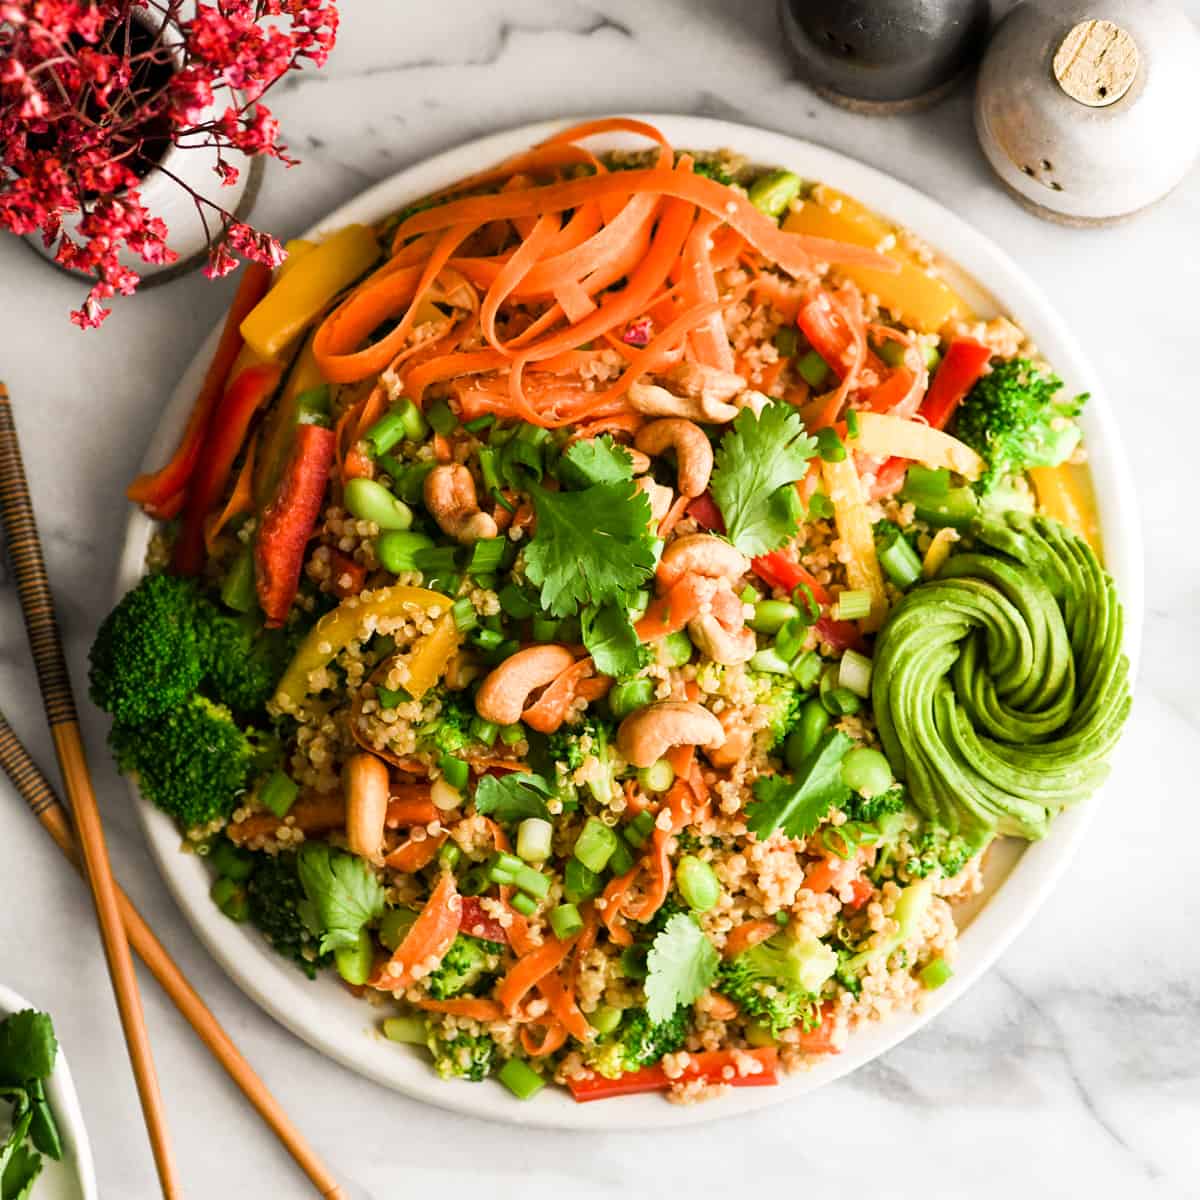 https://joyfoodsunshine.com/wp-content/uploads/2018/02/asian-quinoa-salad-recipe-4.jpg